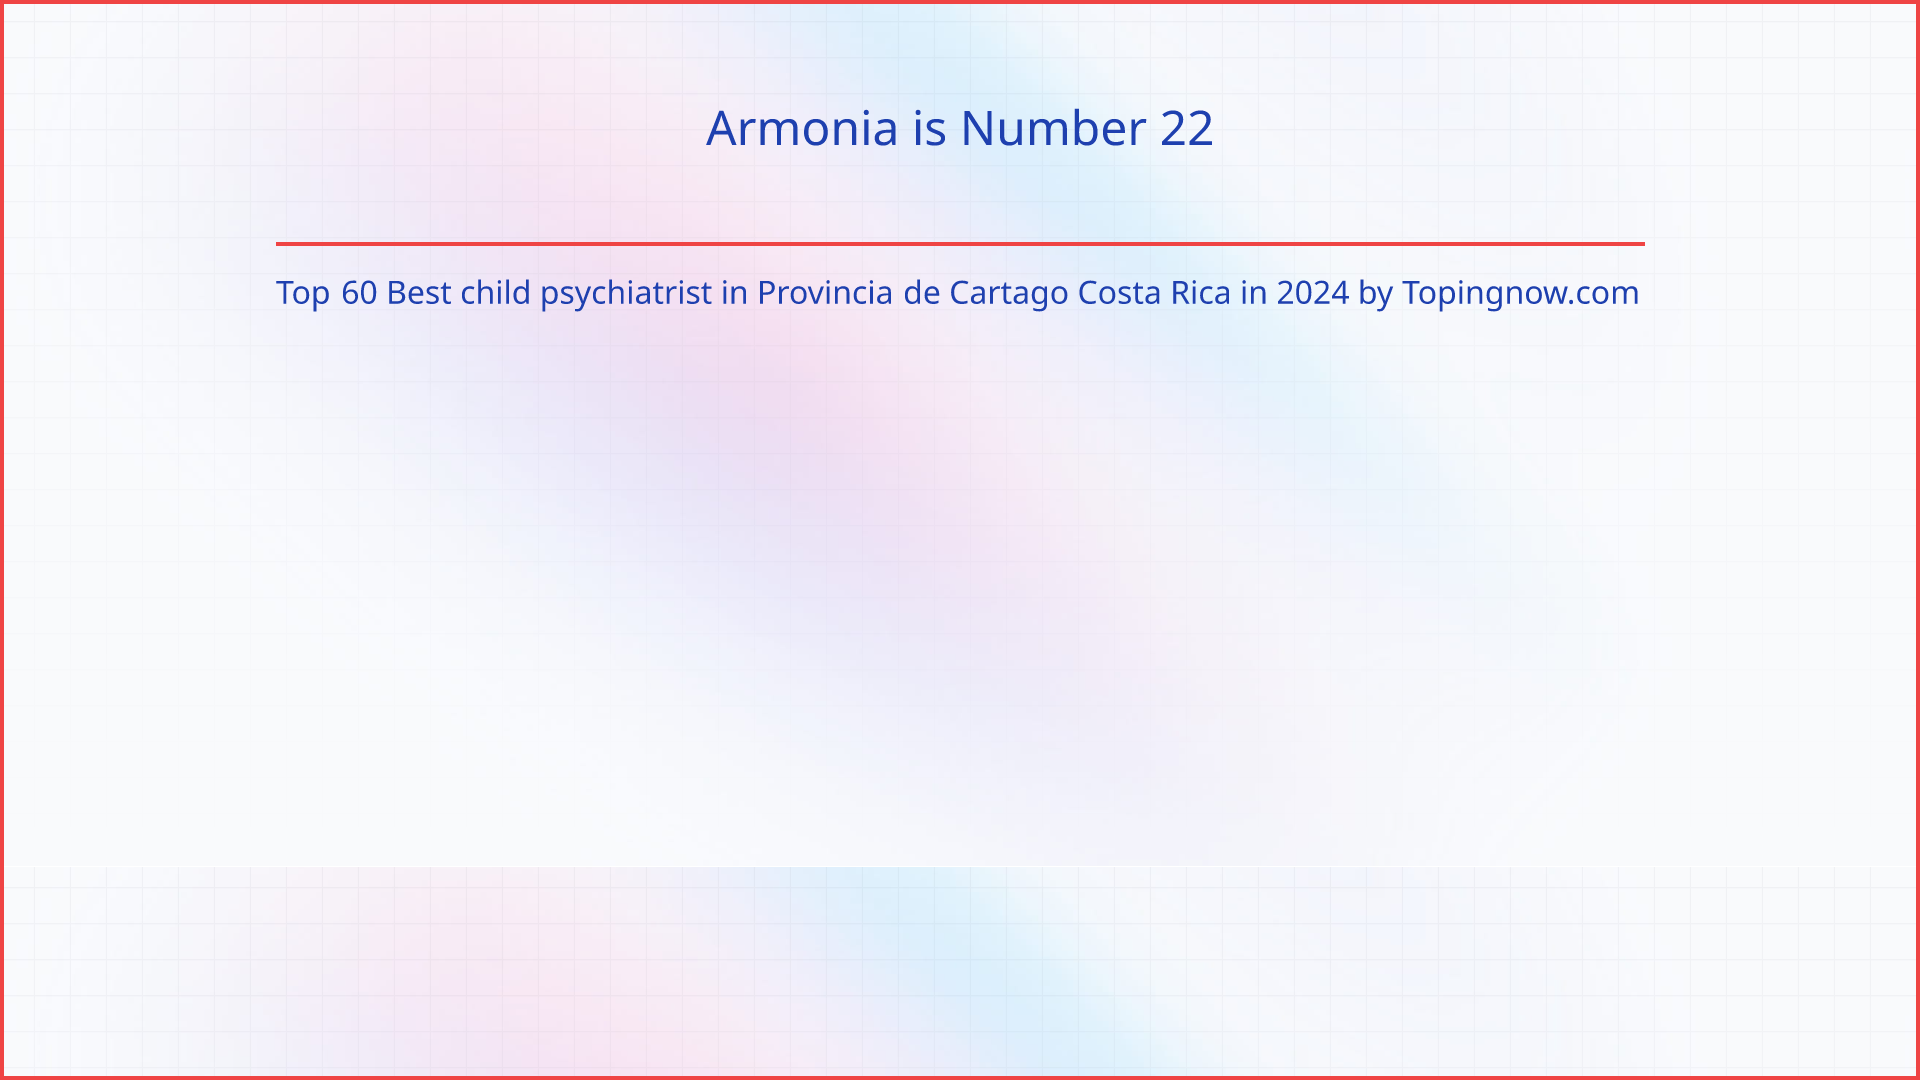 Armonia: Top 60 Best child psychiatrist in Provincia de Cartago Costa Rica in 2024